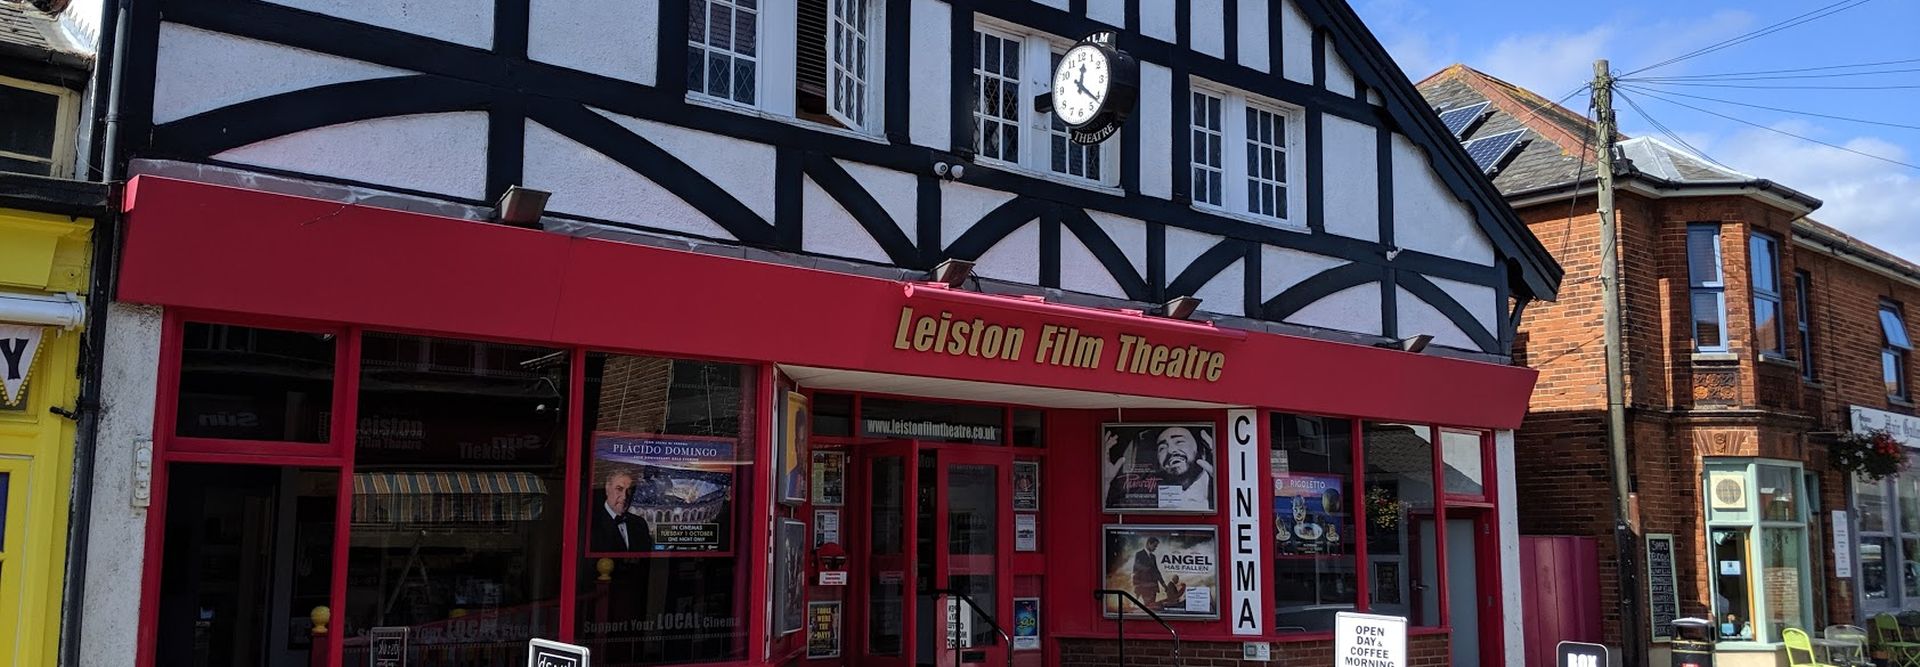 Leiston film theatre Suffolk